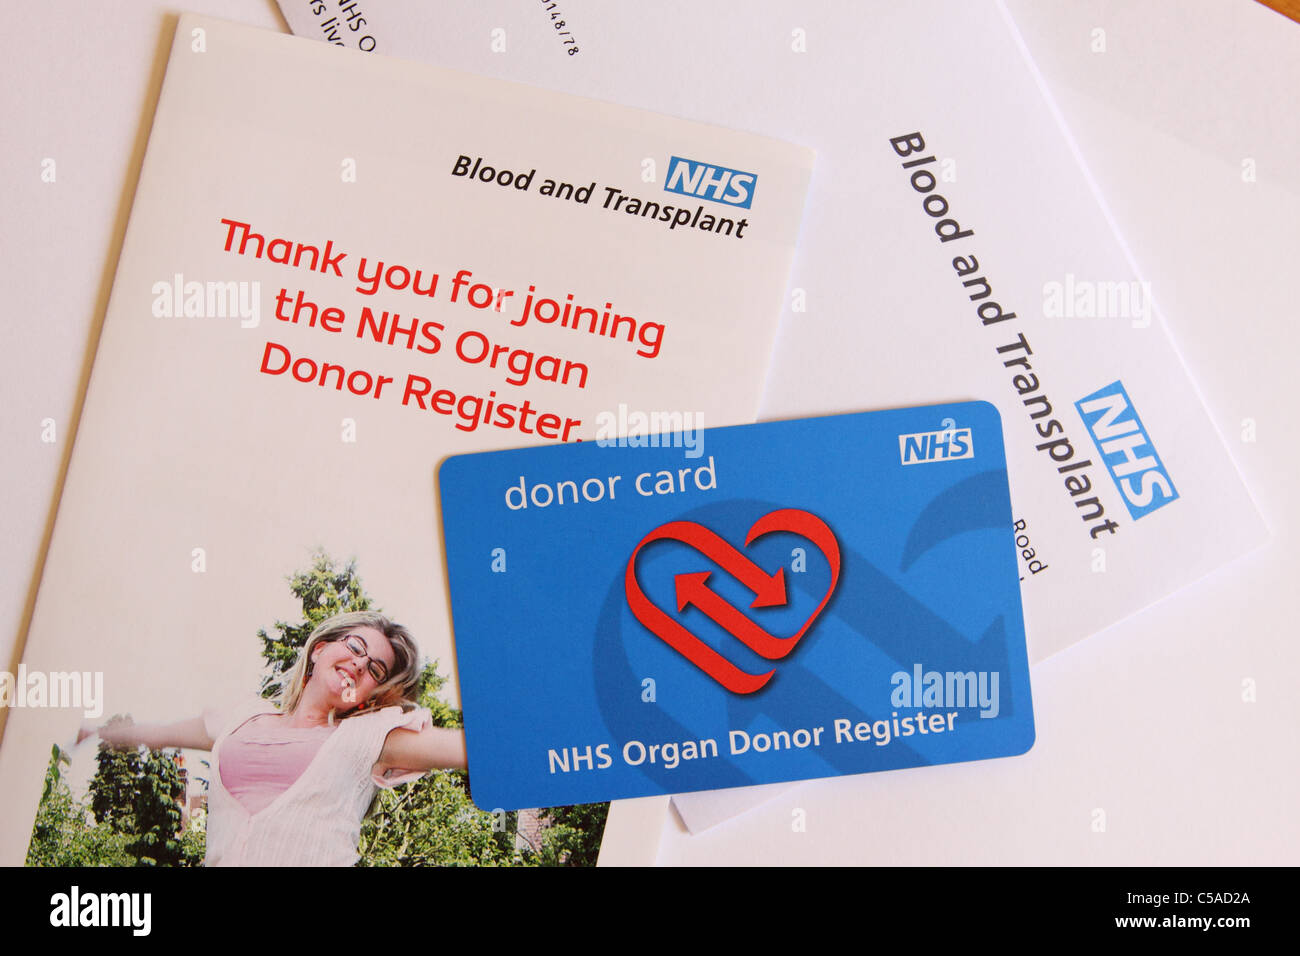 NHS Organspendeausweis Stockfoto